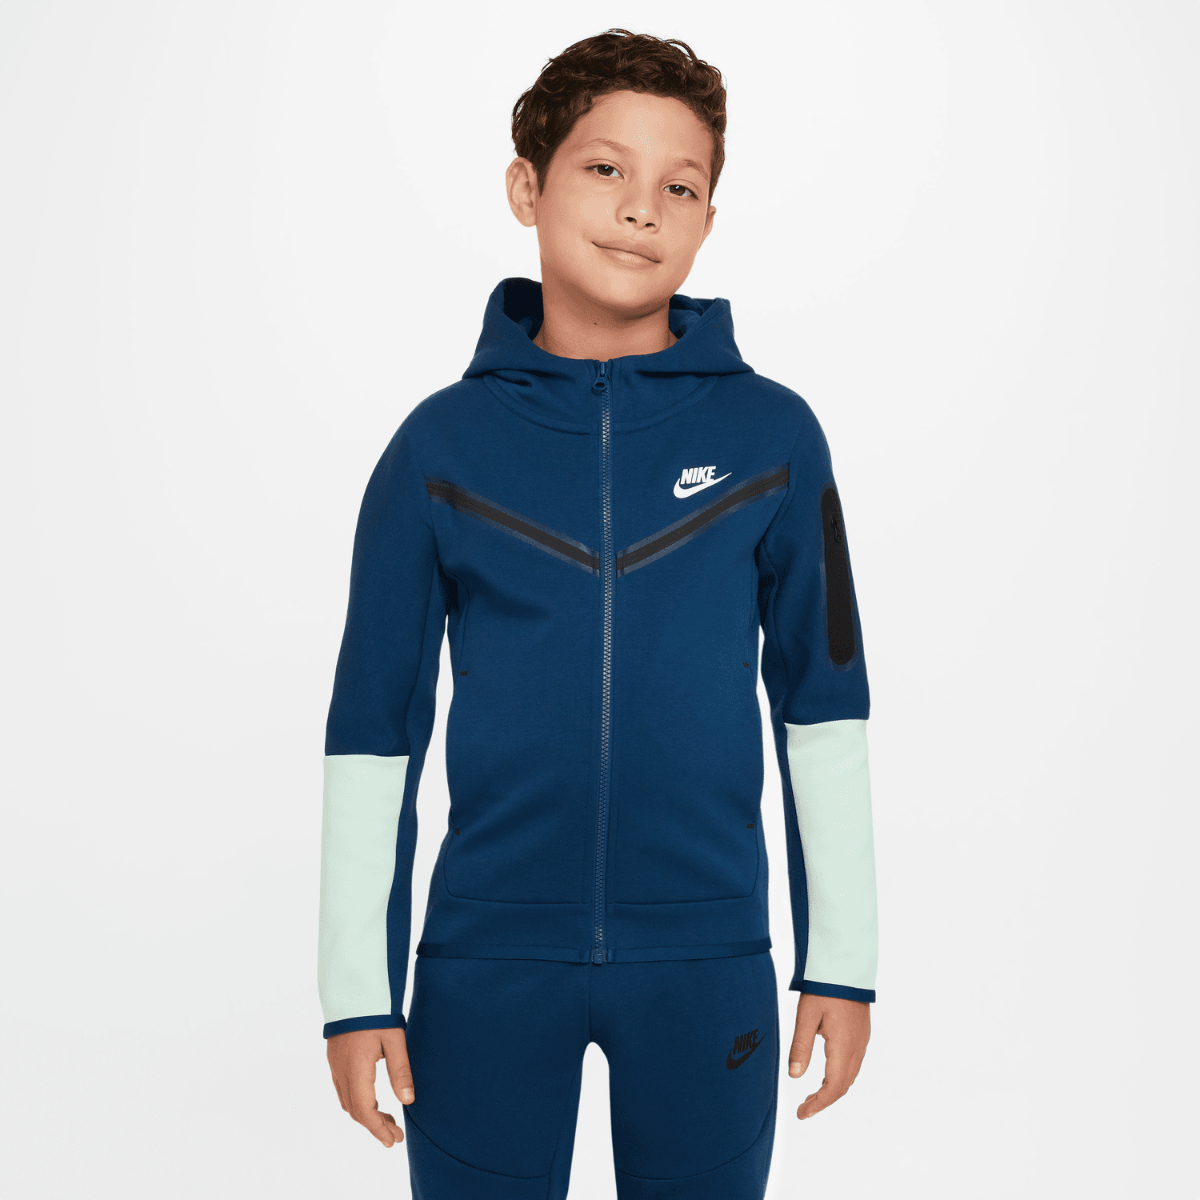 Chaqueta Nike Tech Fleece Junior - Azul marino/Negro